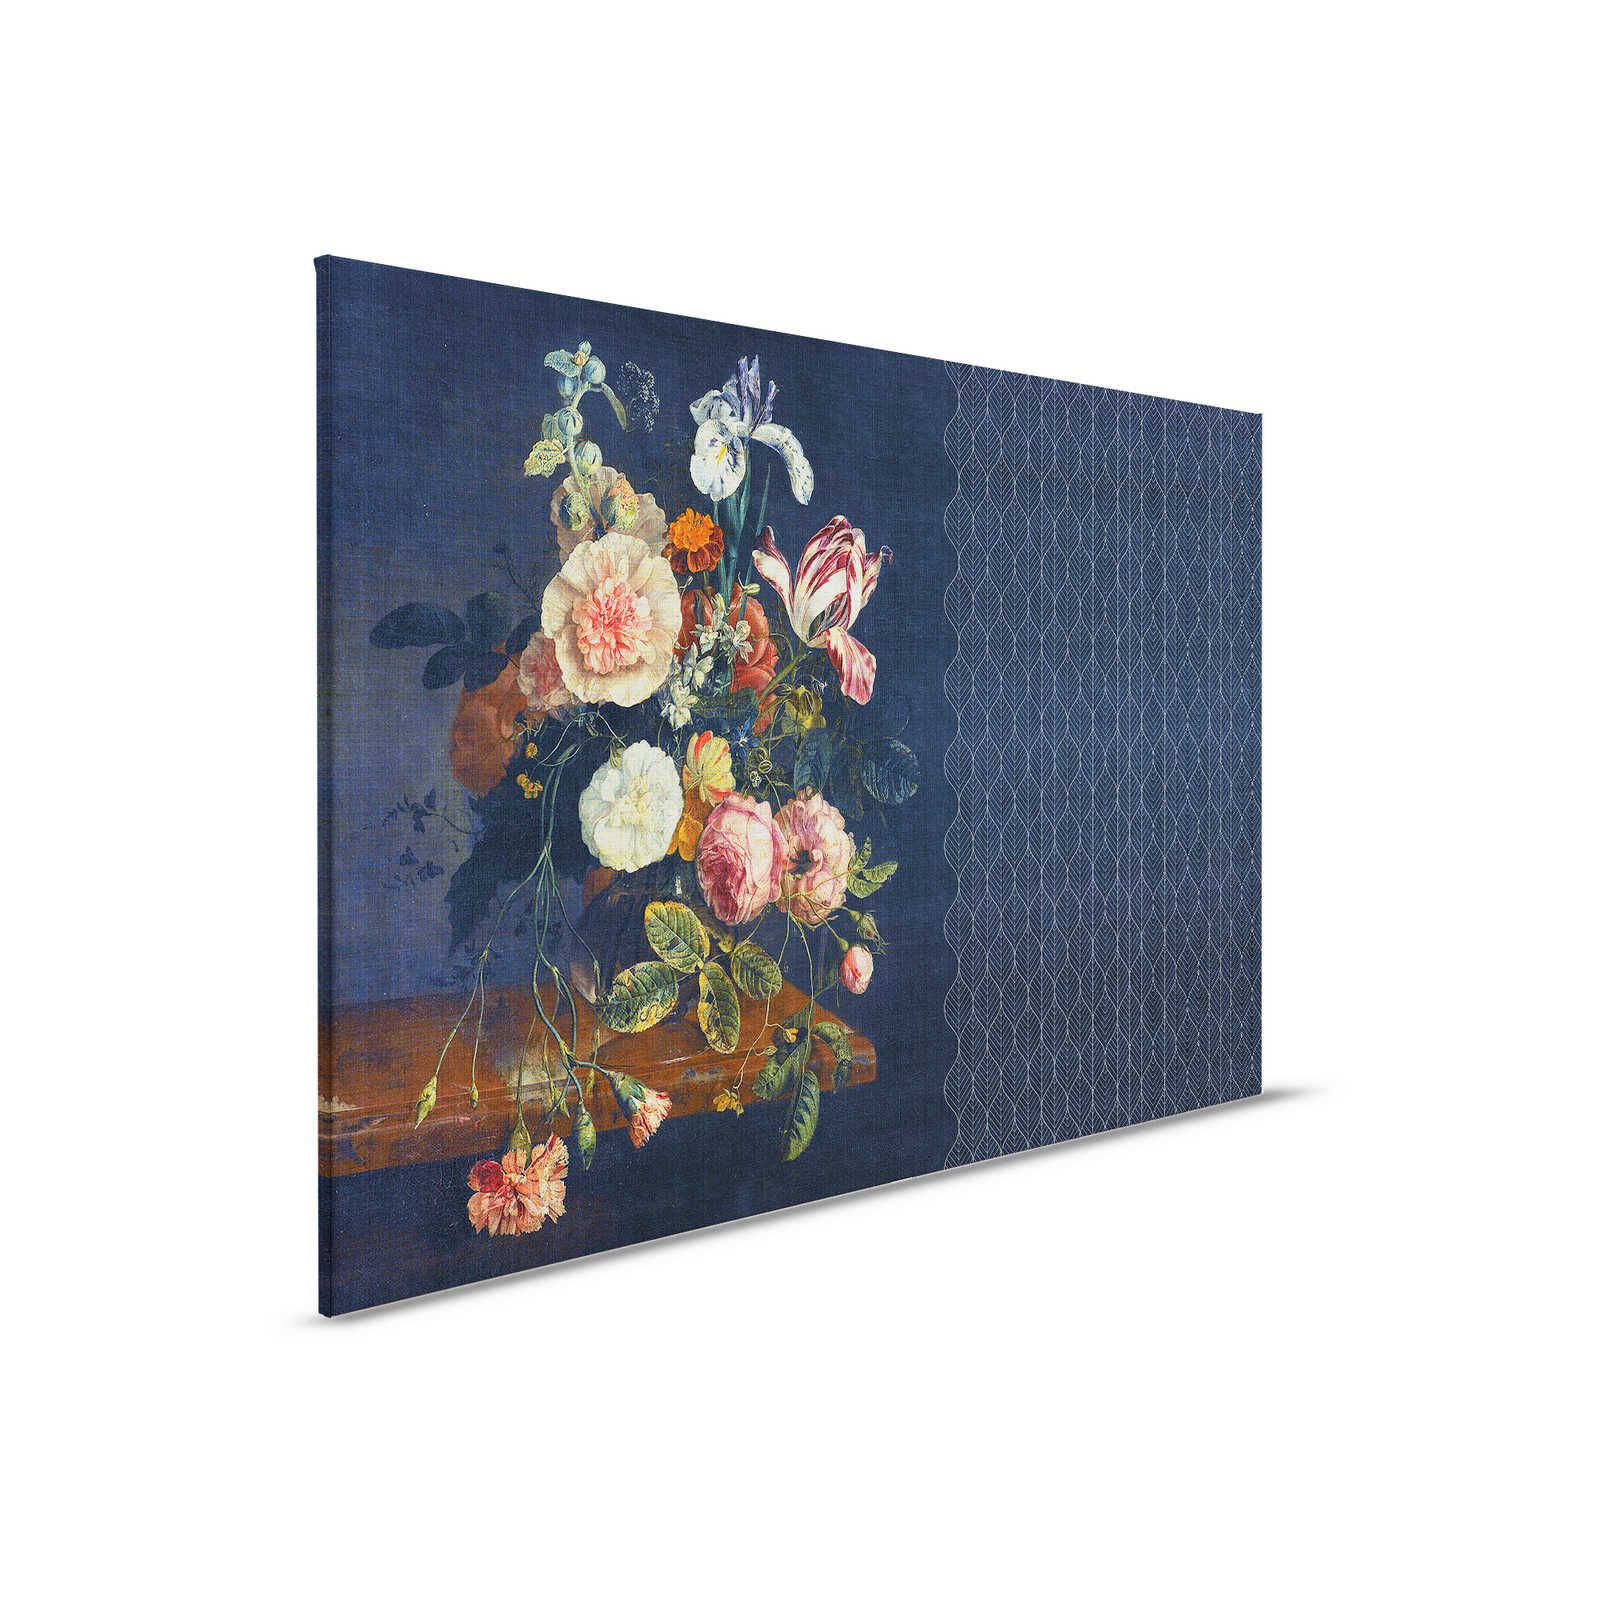 Cortina 2 - Dark Blue Canvas Art Deco Pattern with Bouquet - 0.90 m x 0.60 m
